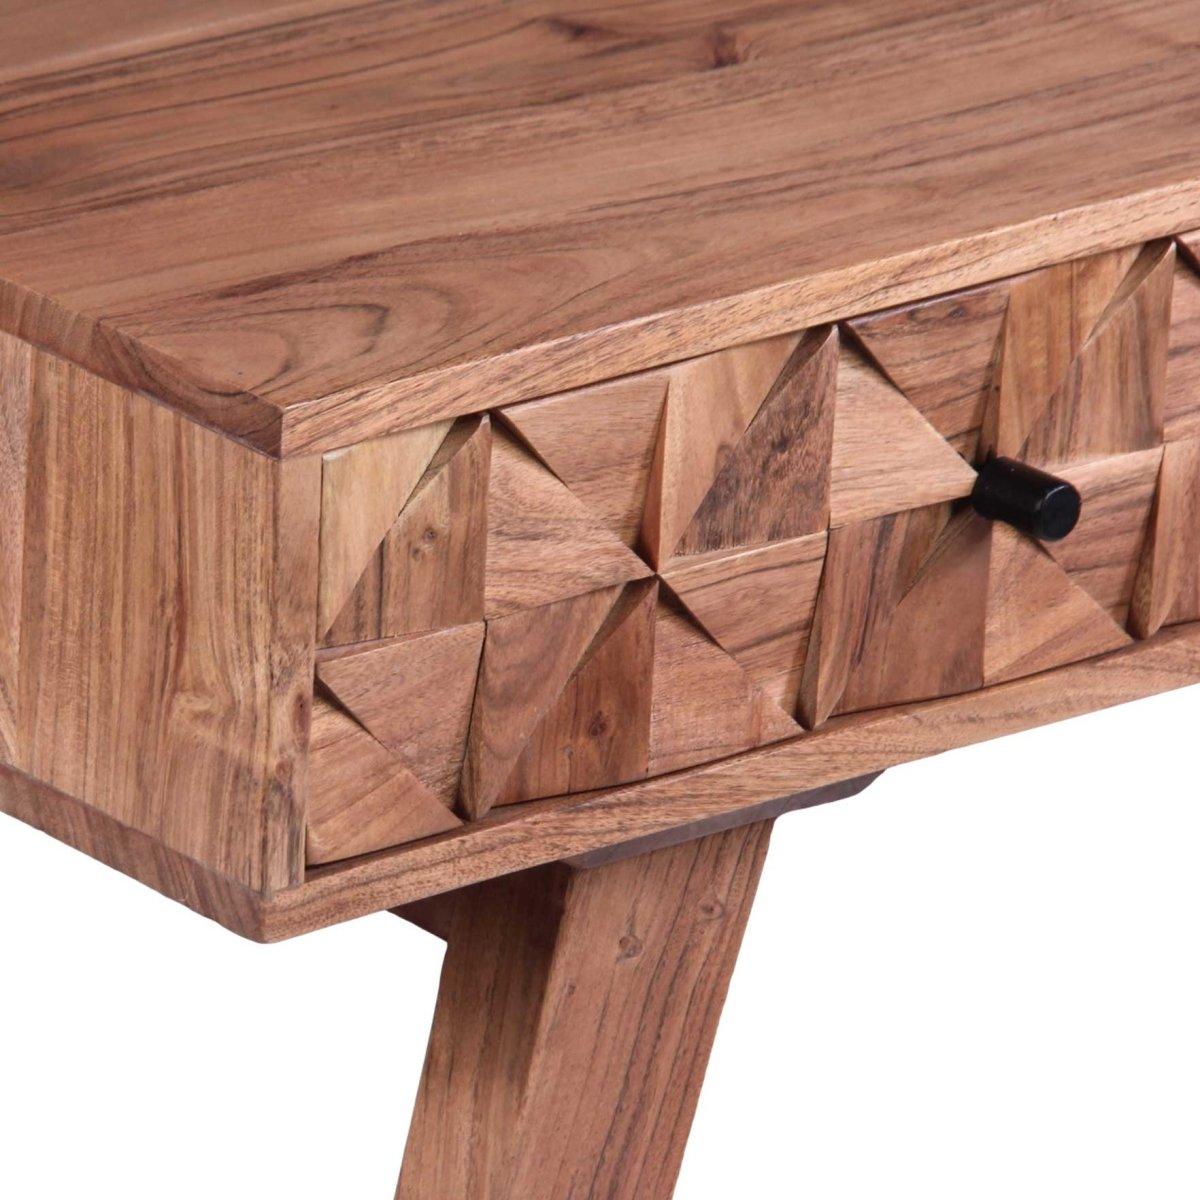 Kenya Acacia wood Computer desk - Rustic Furniture Outlet